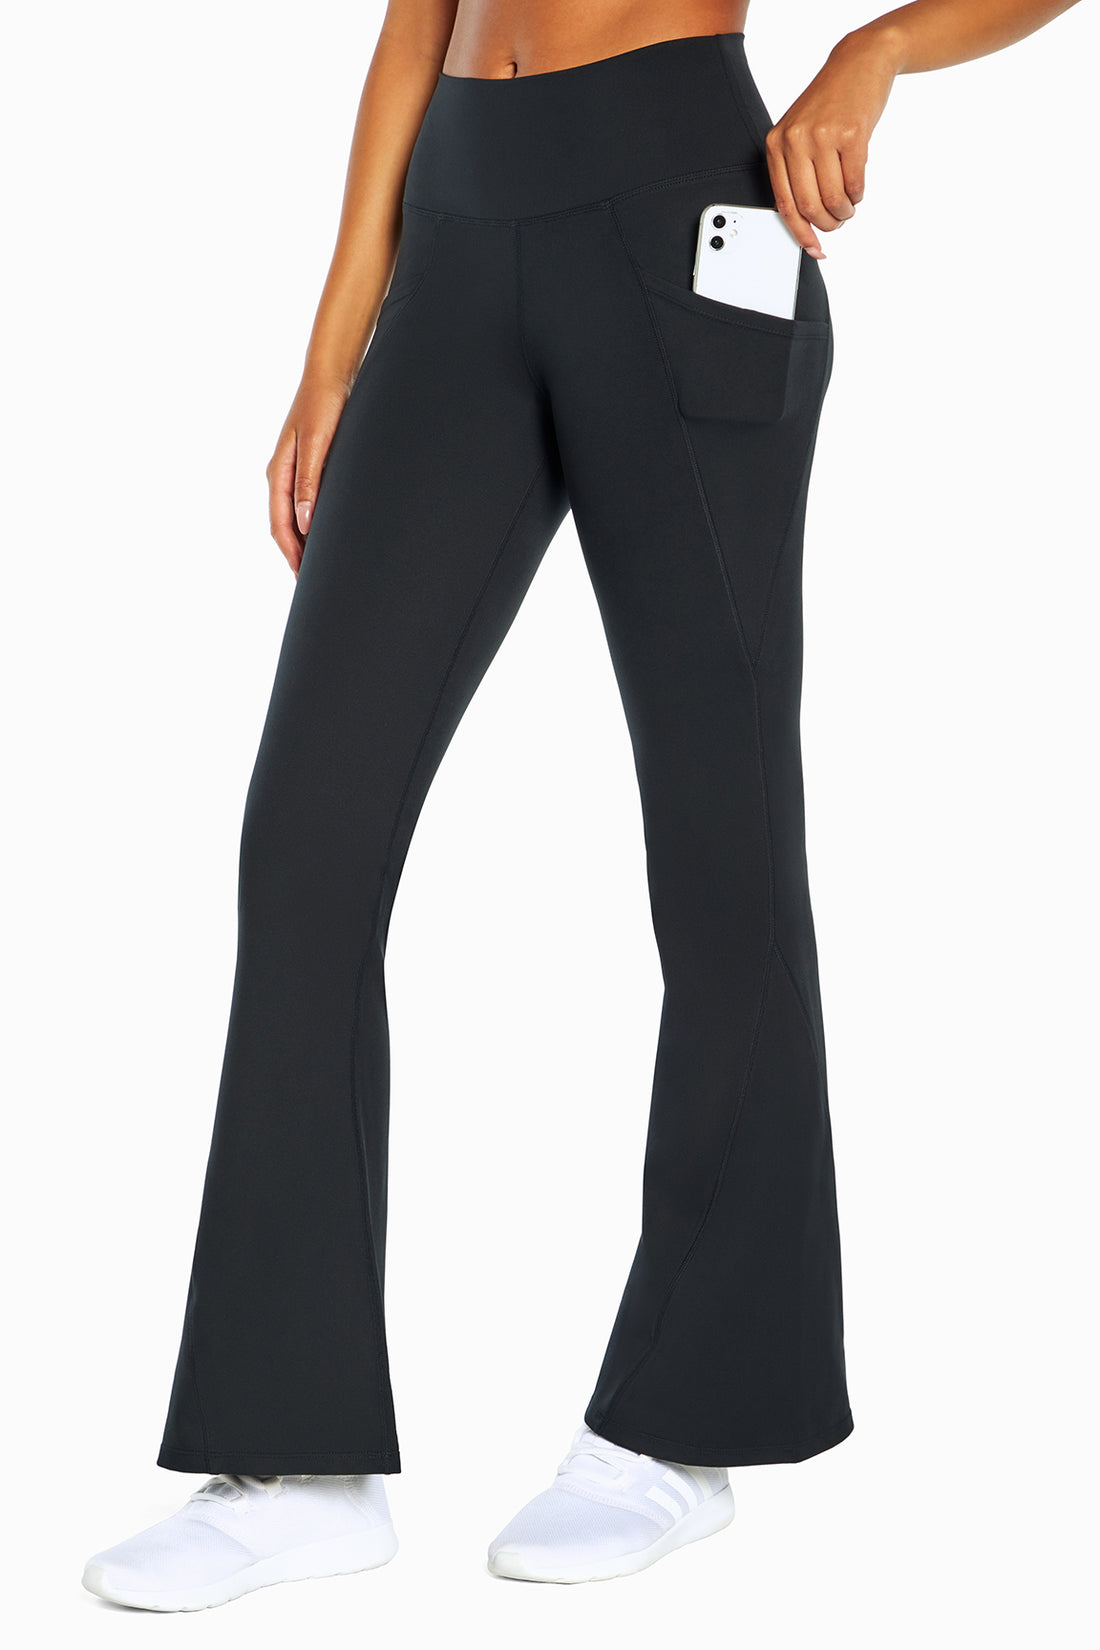  Marika Relaxed Jersey Pant, Black, X-Large : Clothing